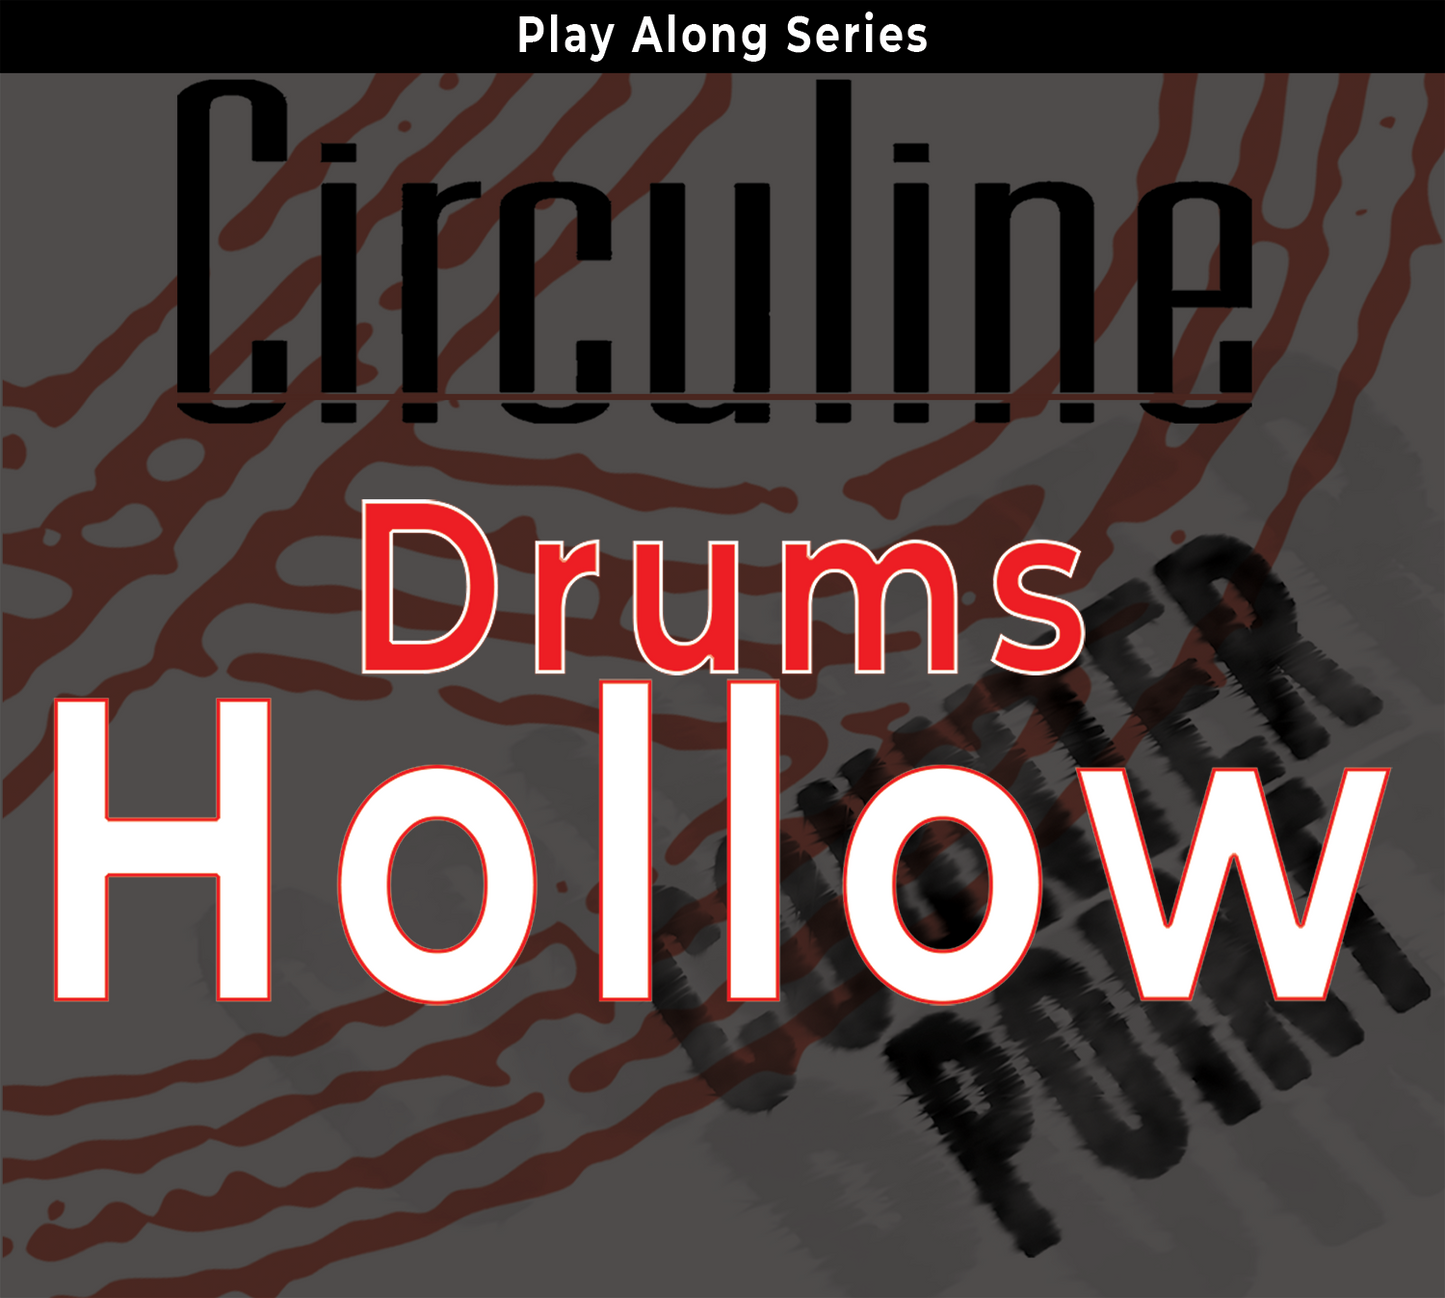 Drums: PlayAlong - Hollow